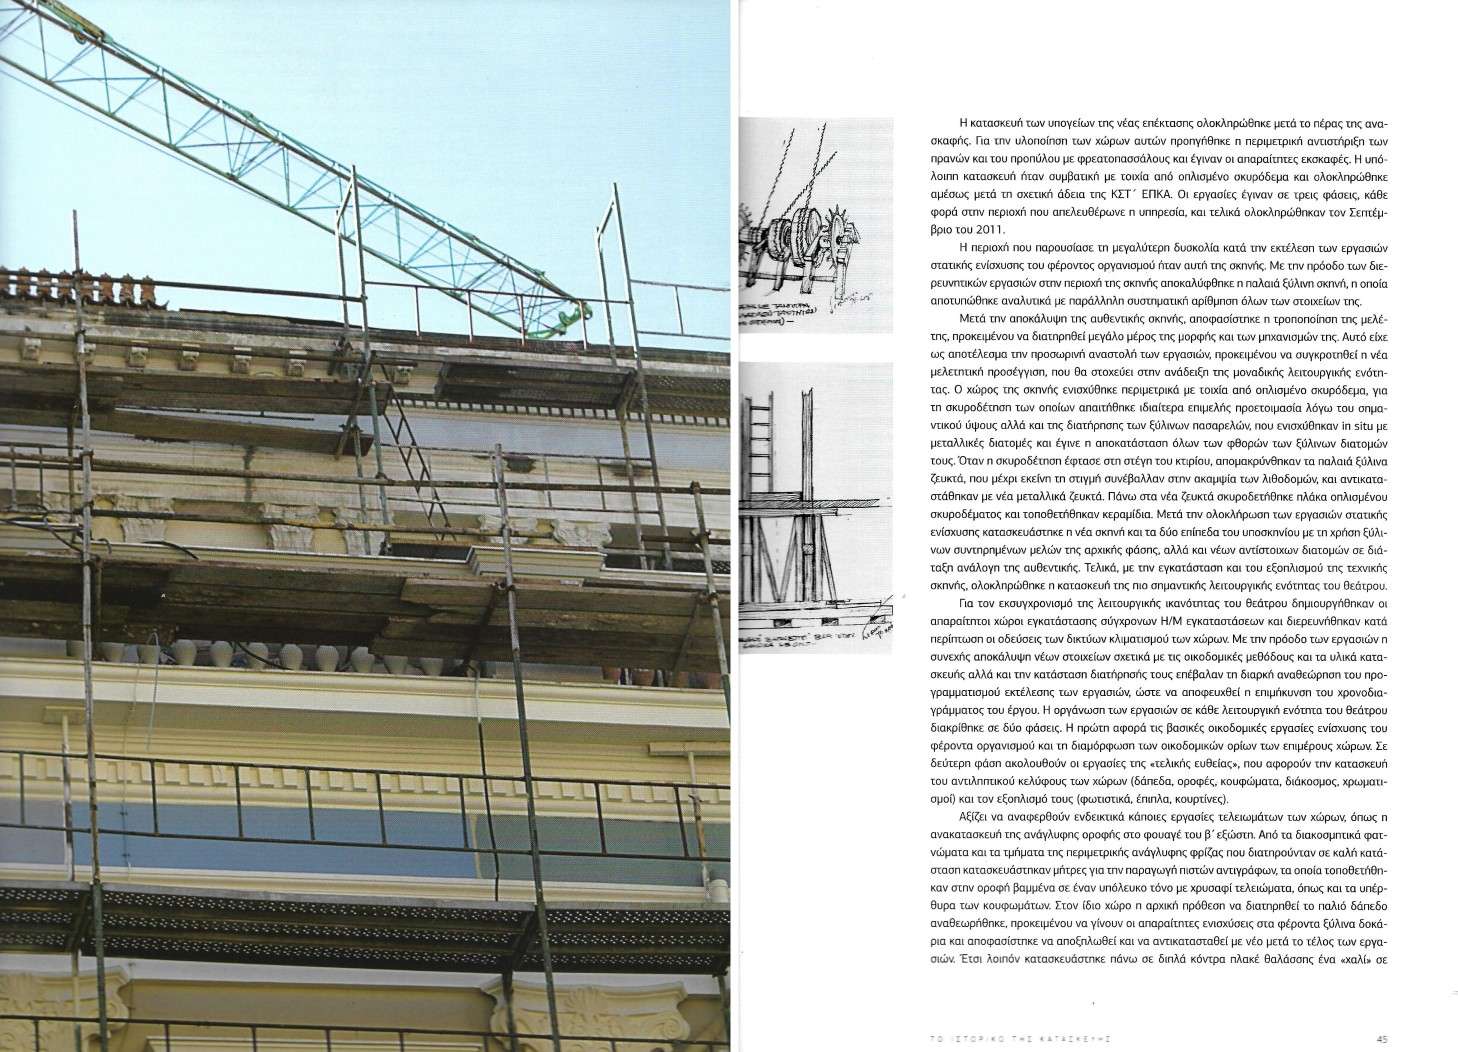 Piraeus Public Theatre Restoration, Benaki Publication 2013  “History of Construction”, written by A.Zournatzi & G.Laskaris